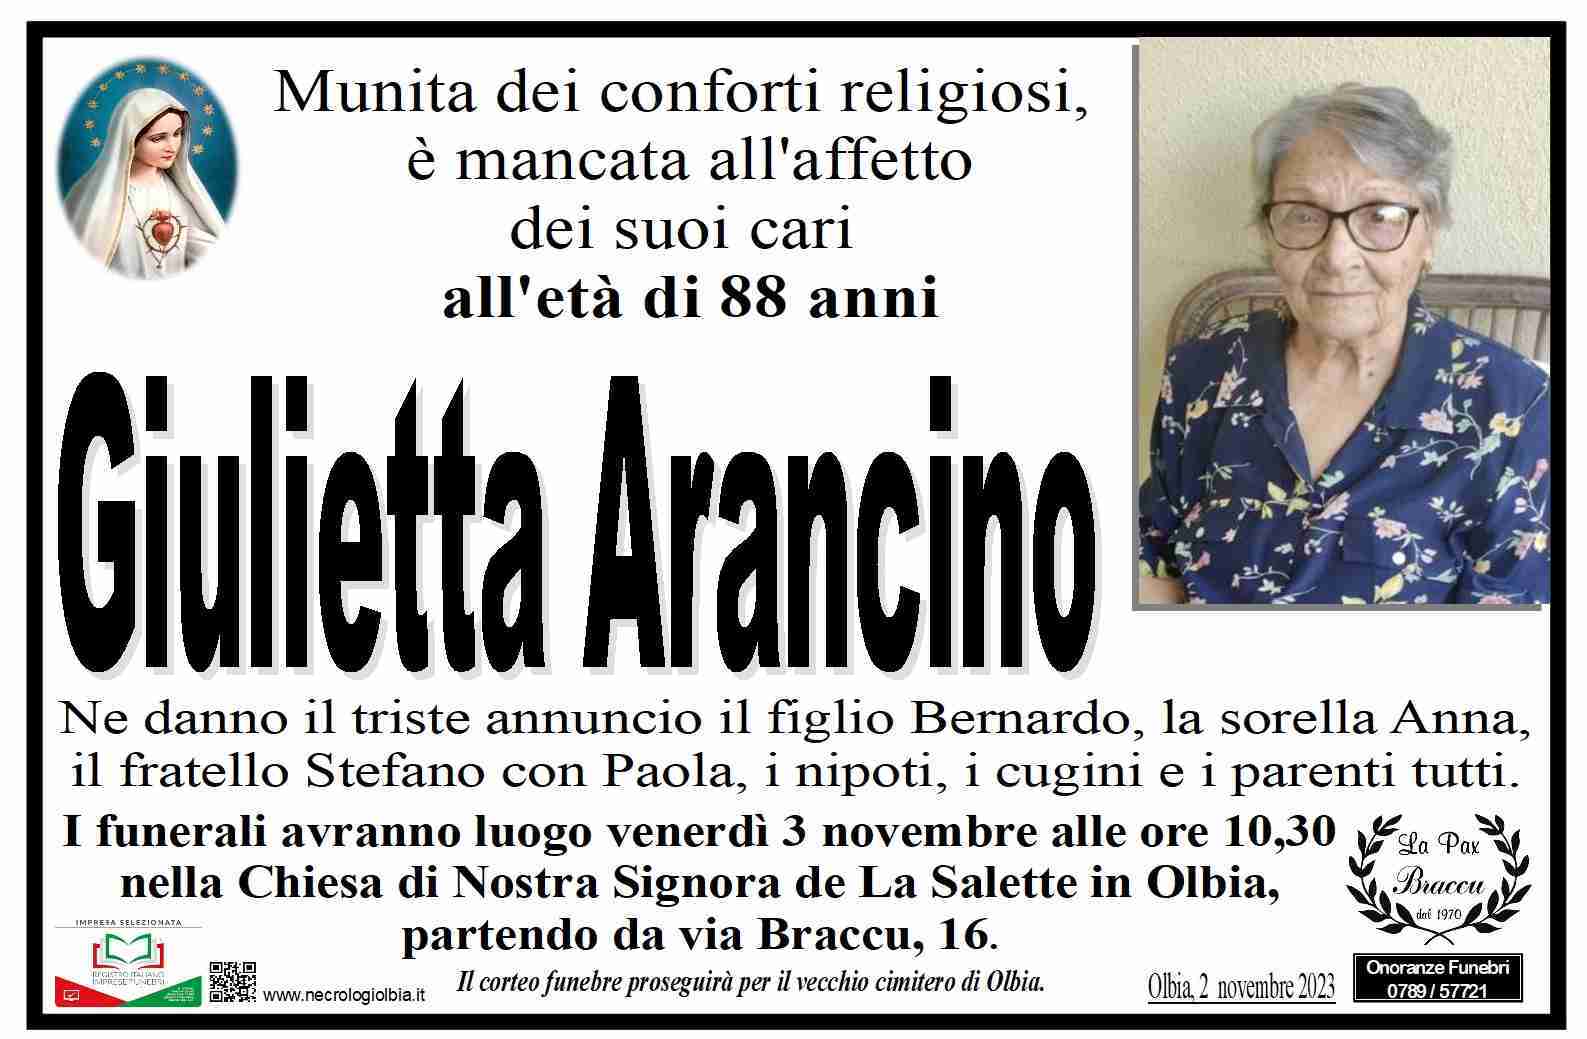 Giulietta Arancino